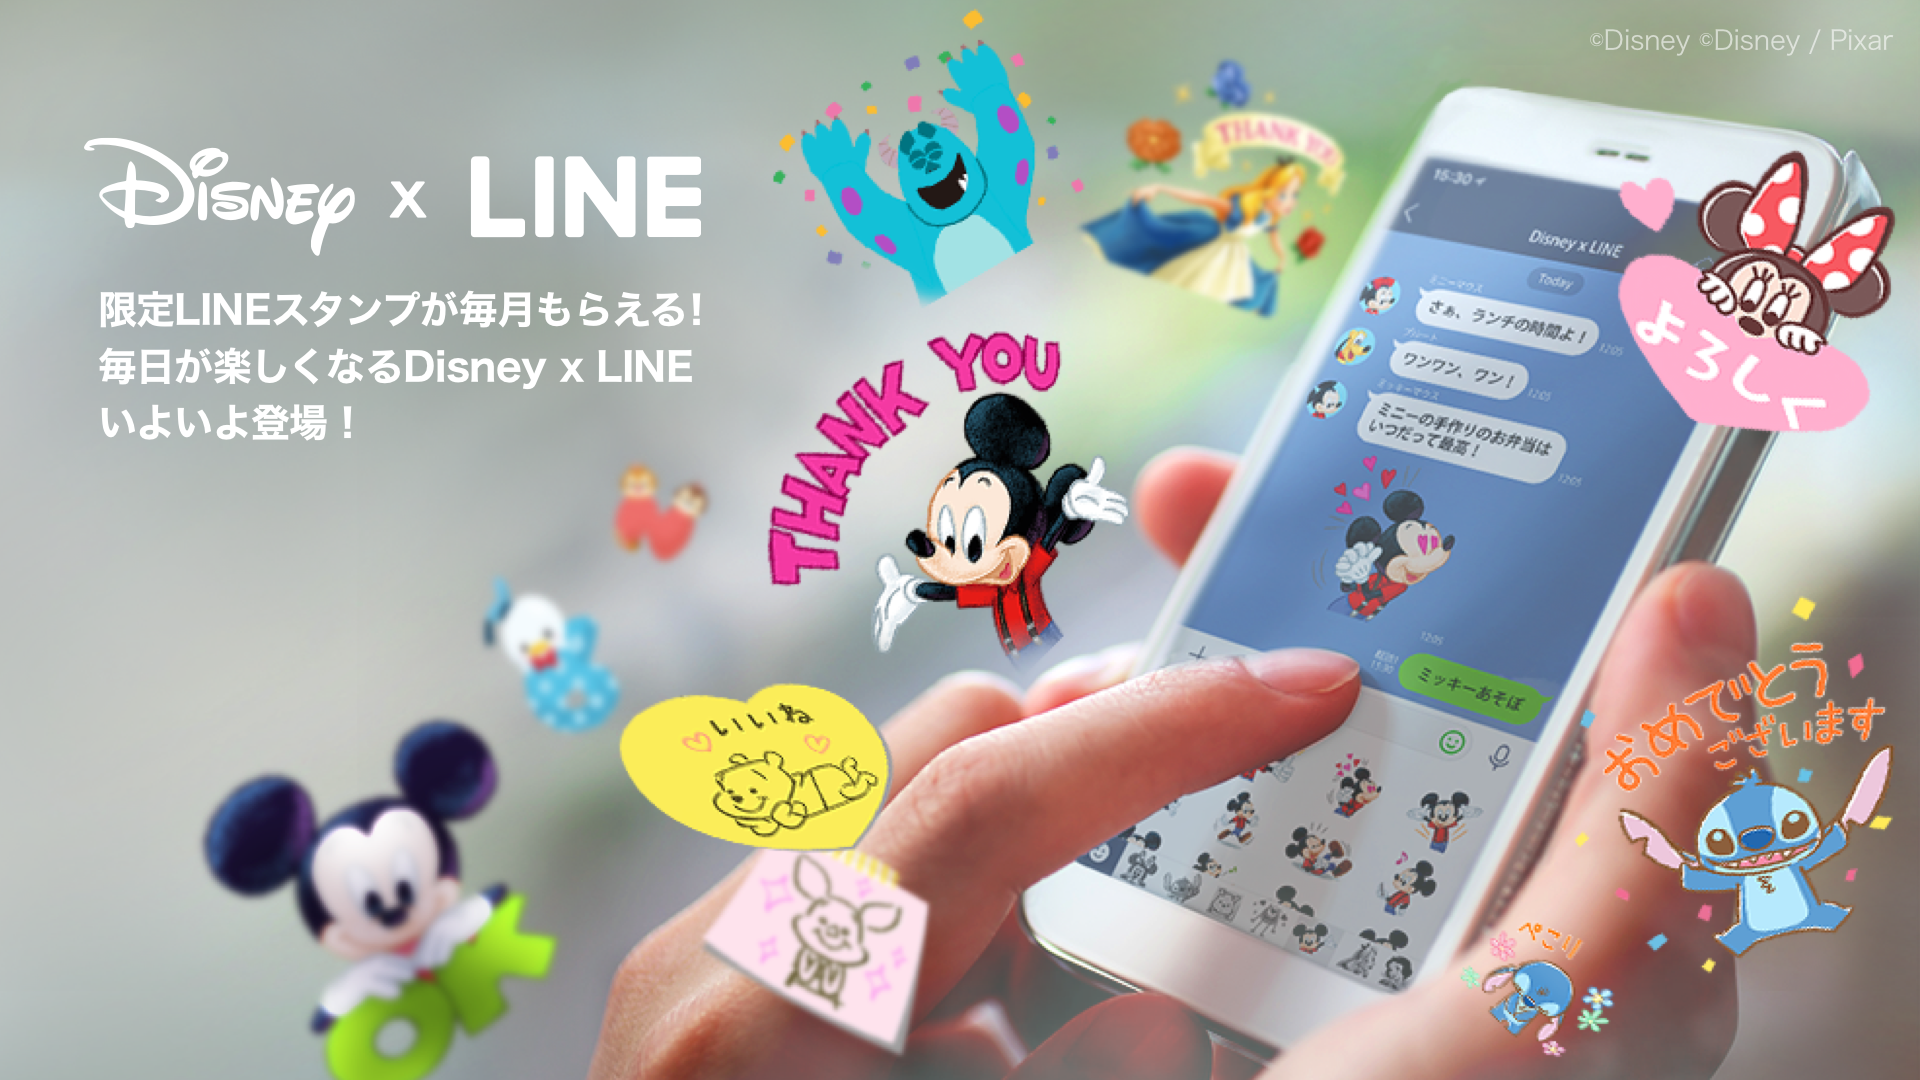 Line上でミッキーマウスと友だちになれる ディズニーとlineがお届けする月額サービス Disney X Line ついに登場 Line公式ブログ